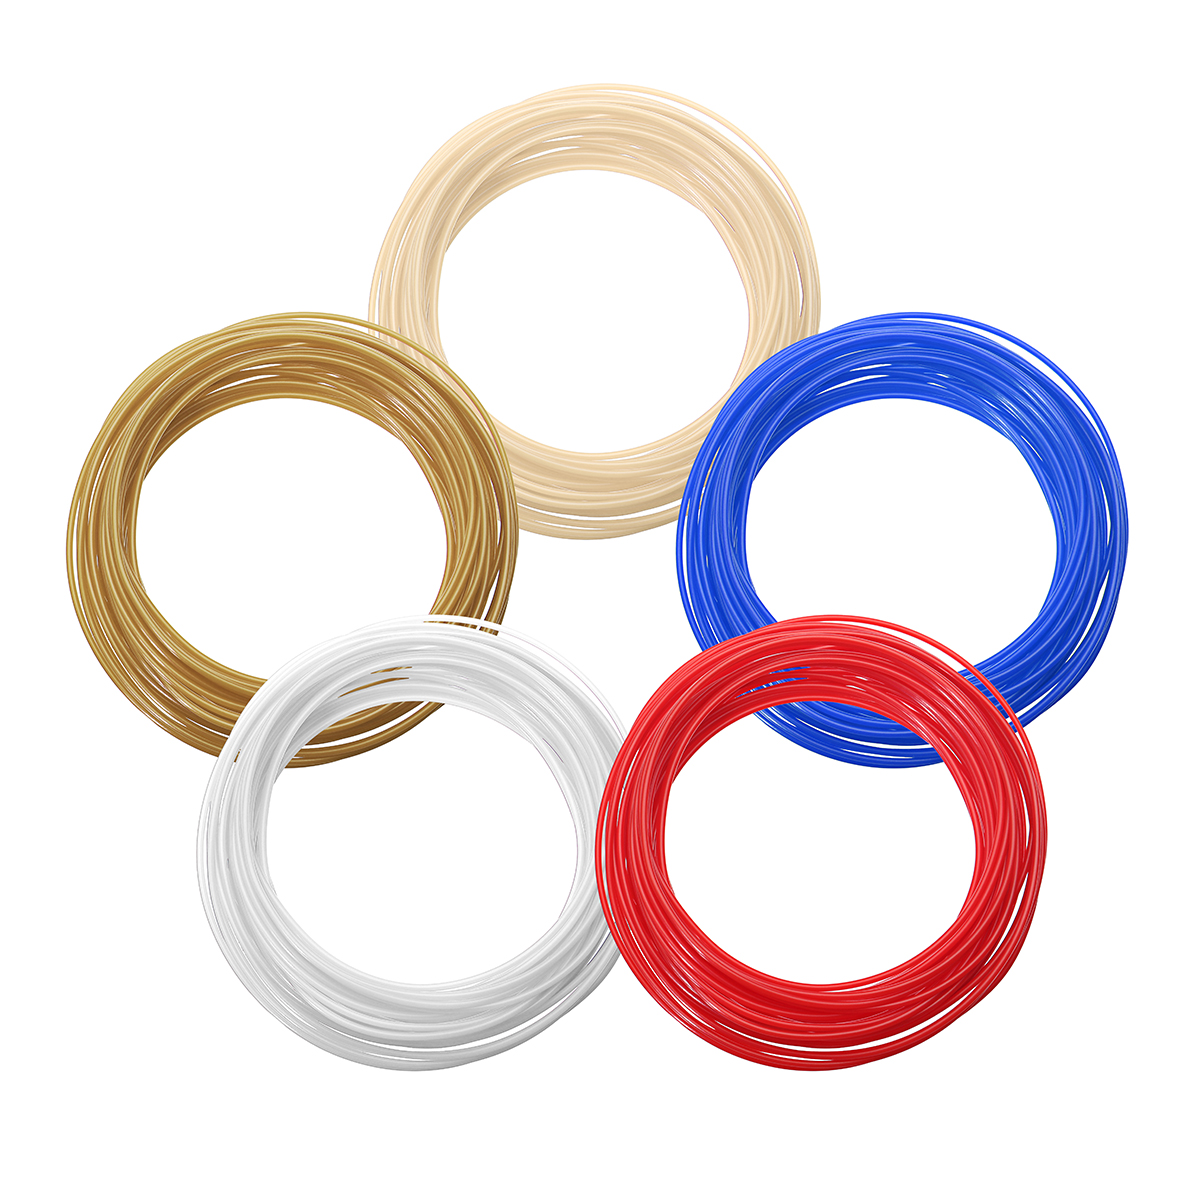 20 Colors/Pack 5/10m Length Per Color PLA 1.75mm Filament for 3D Printing Pen 0.4mm Nozzle 14